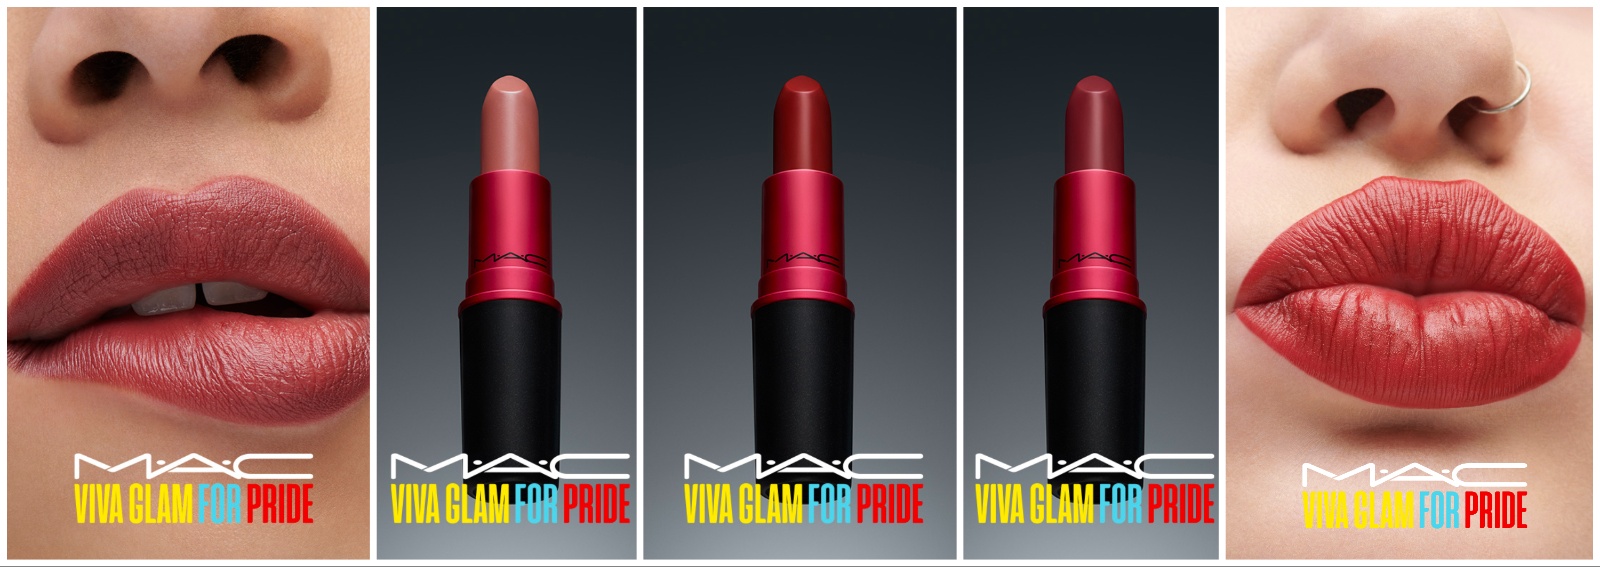 mac cosmetics pride month viva glam regali cover desktop